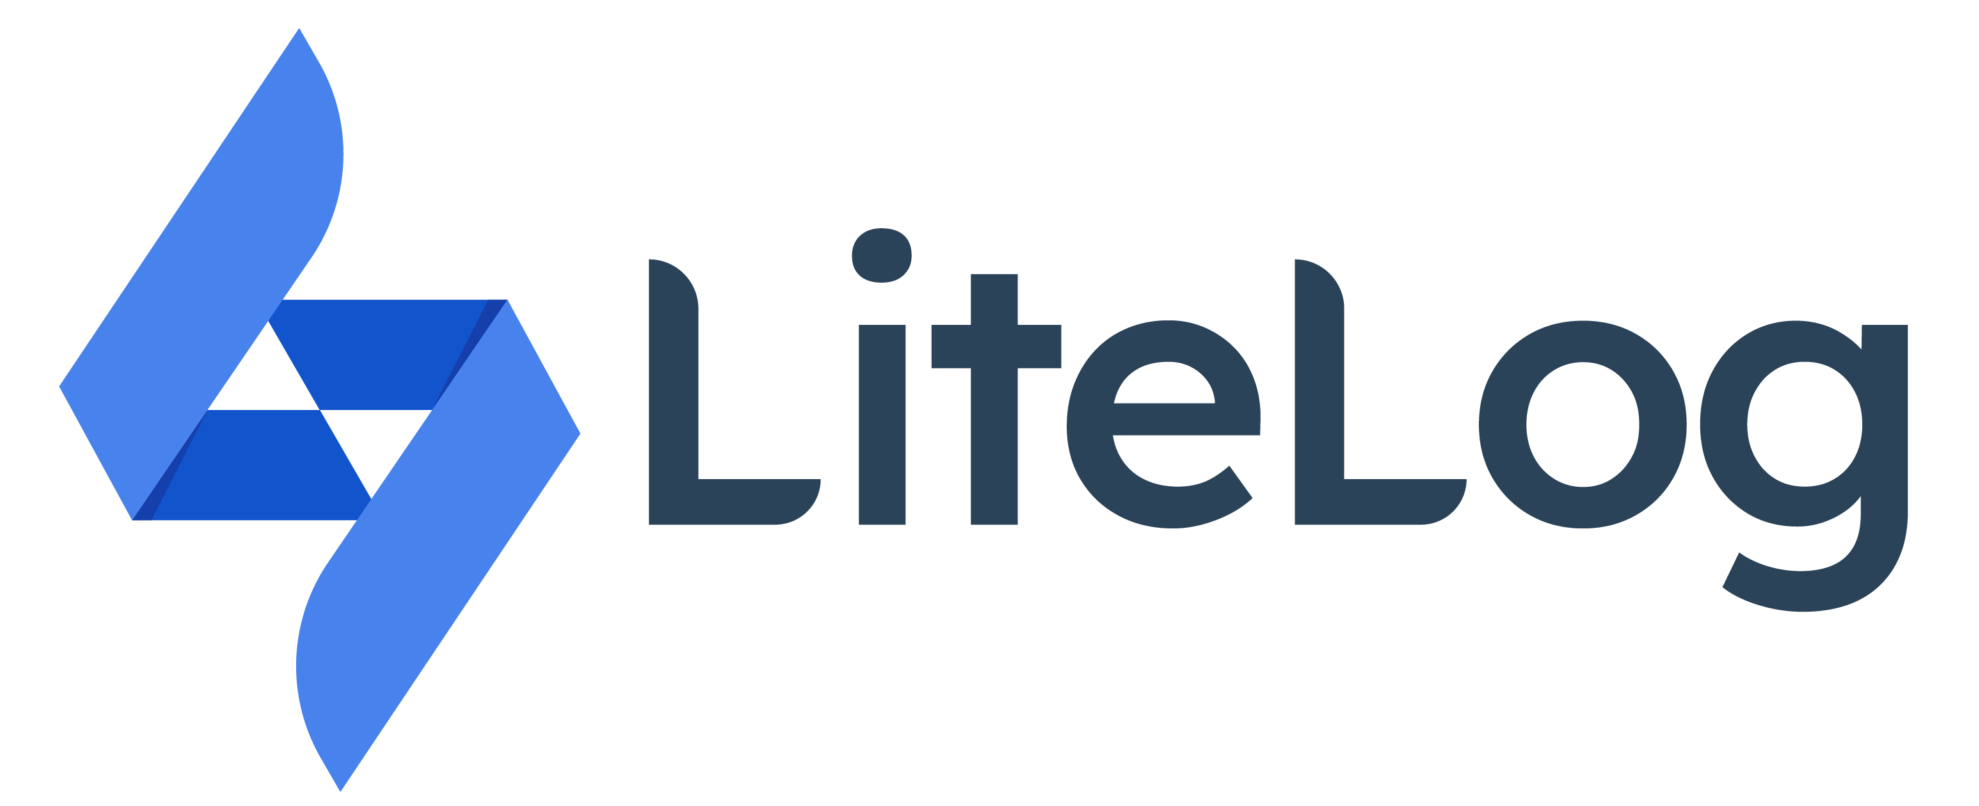 LiteLog logo